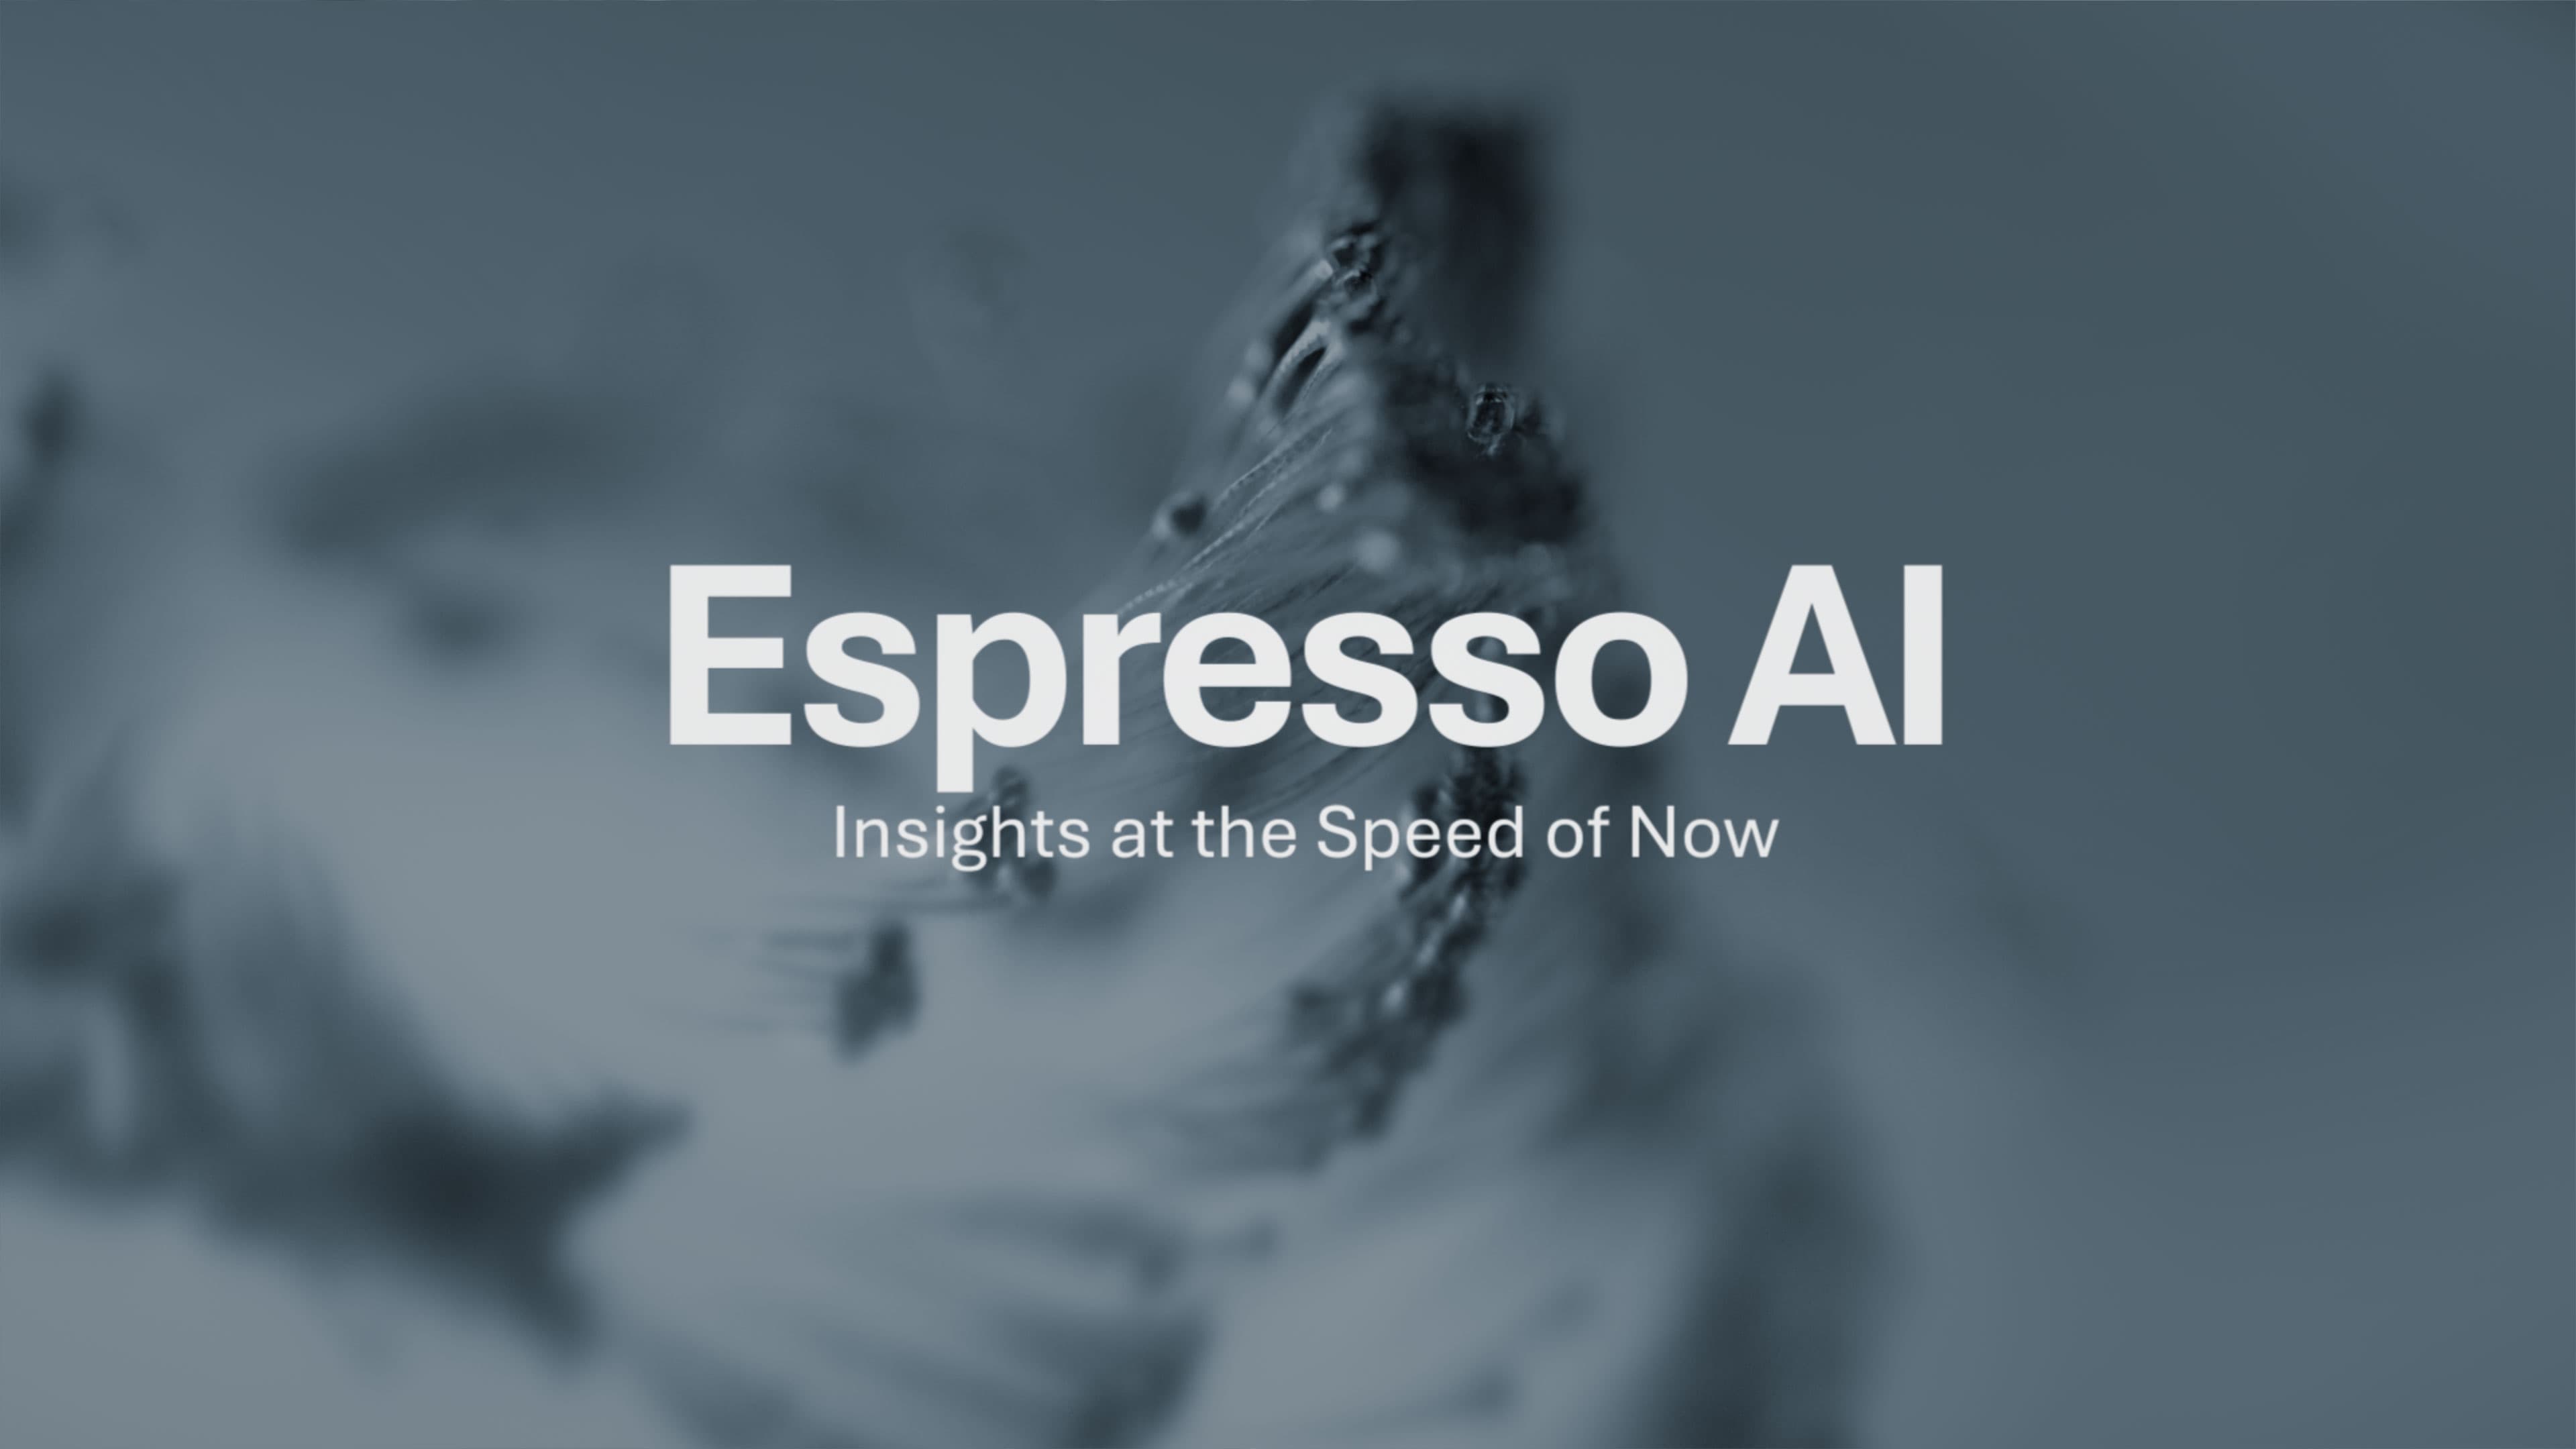 Watch the Espresso AI video